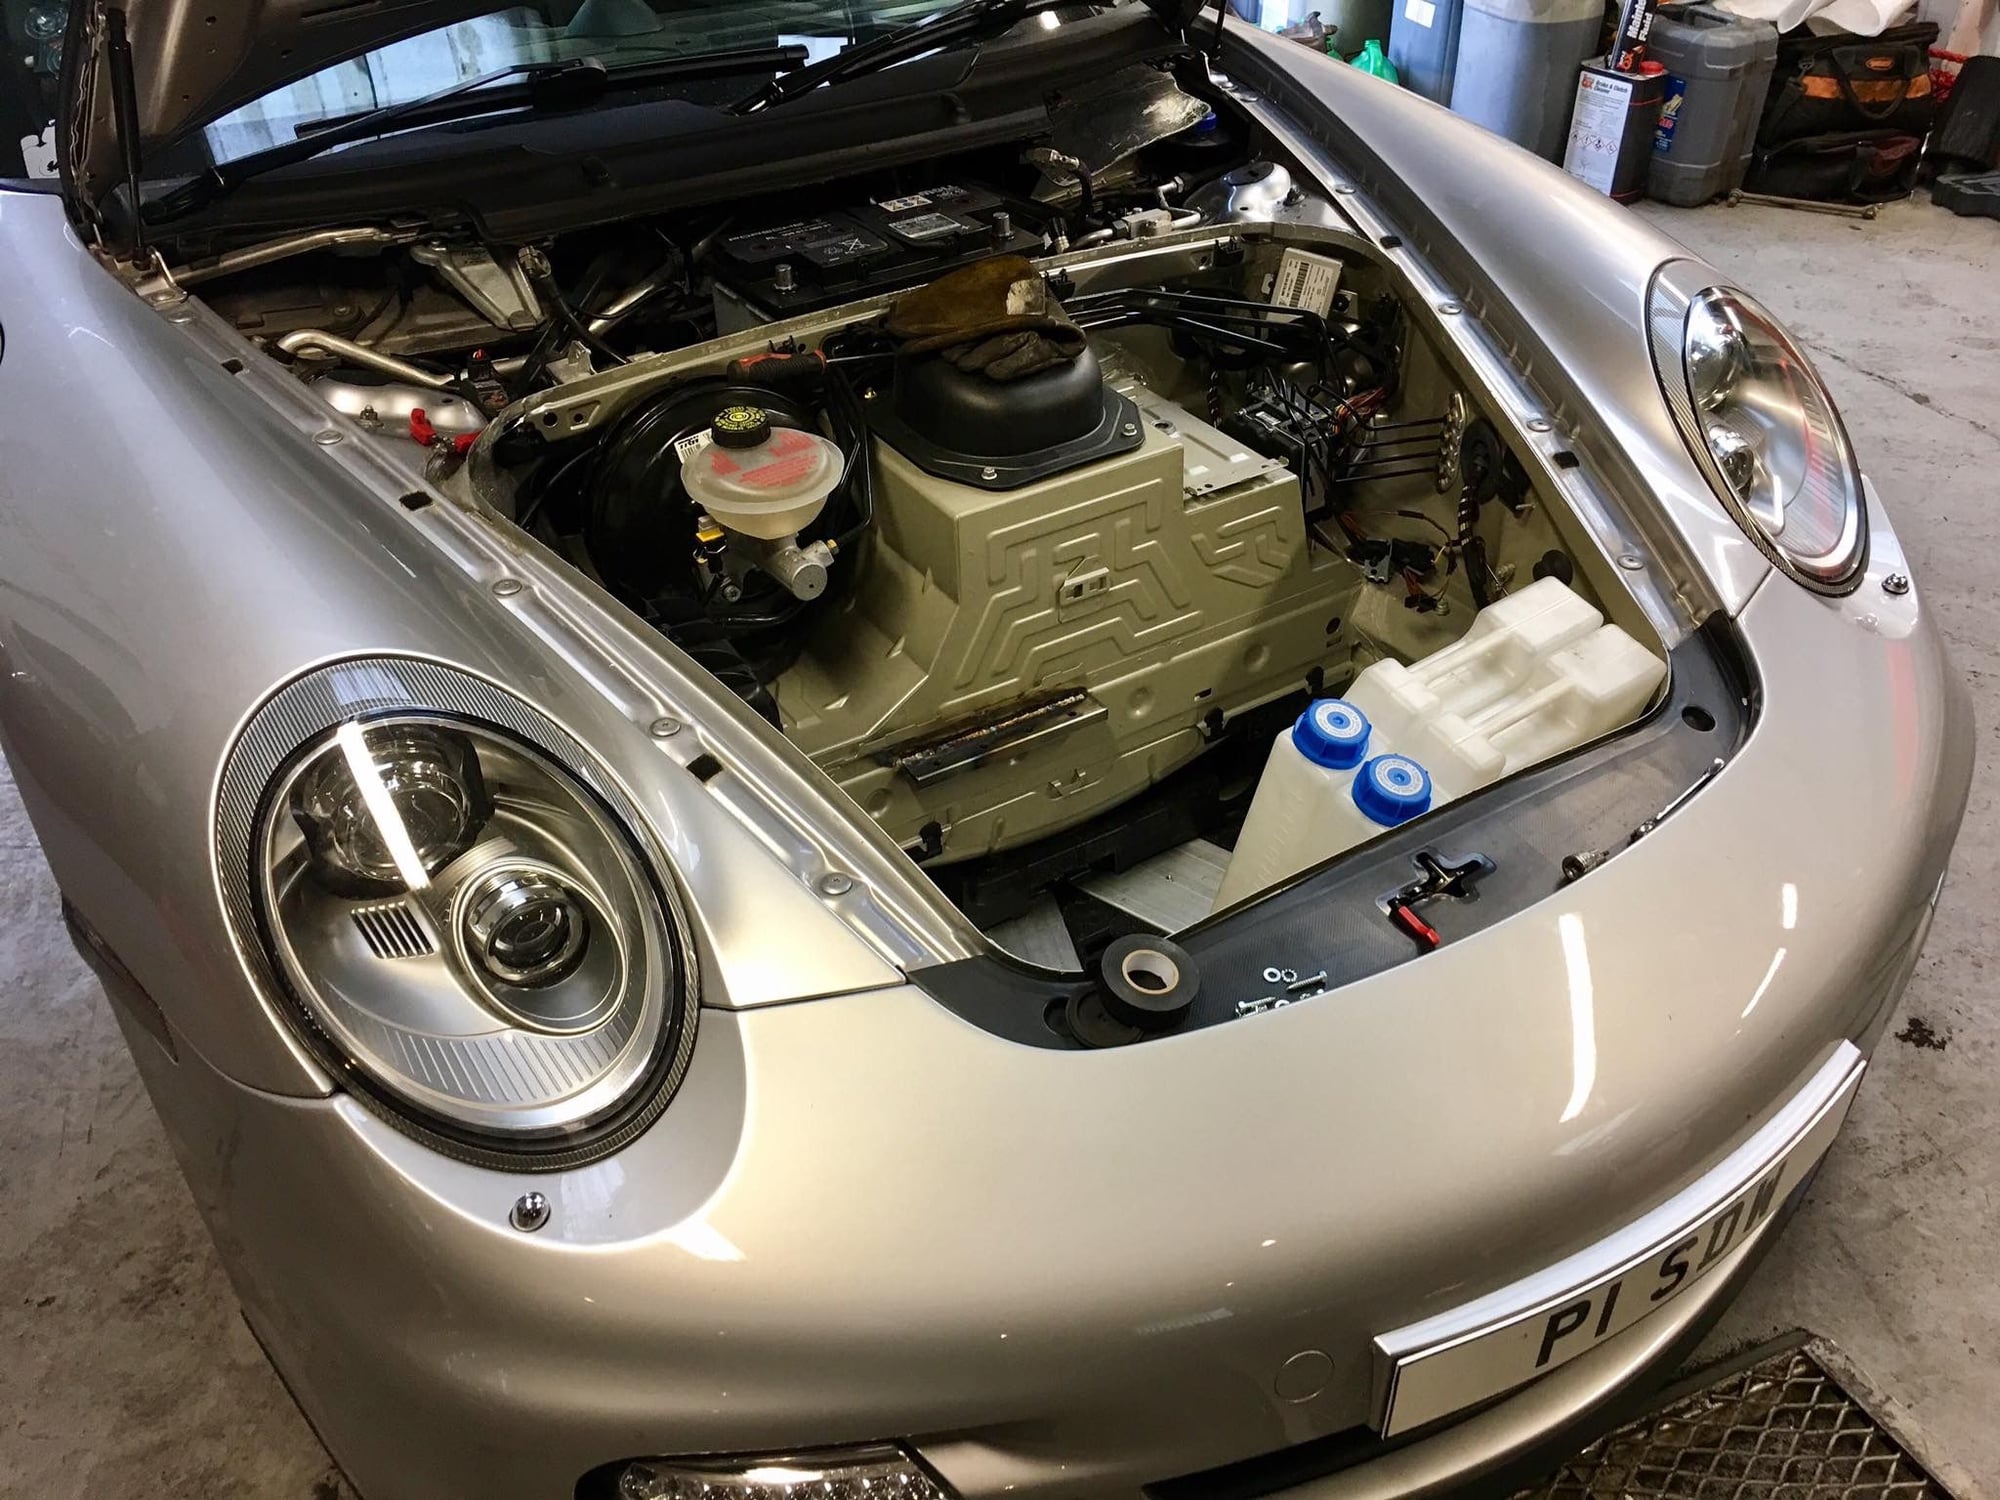 997.2 Turbo S Build - 6SpeedOnline - Porsche Forum and Luxury Car Resource